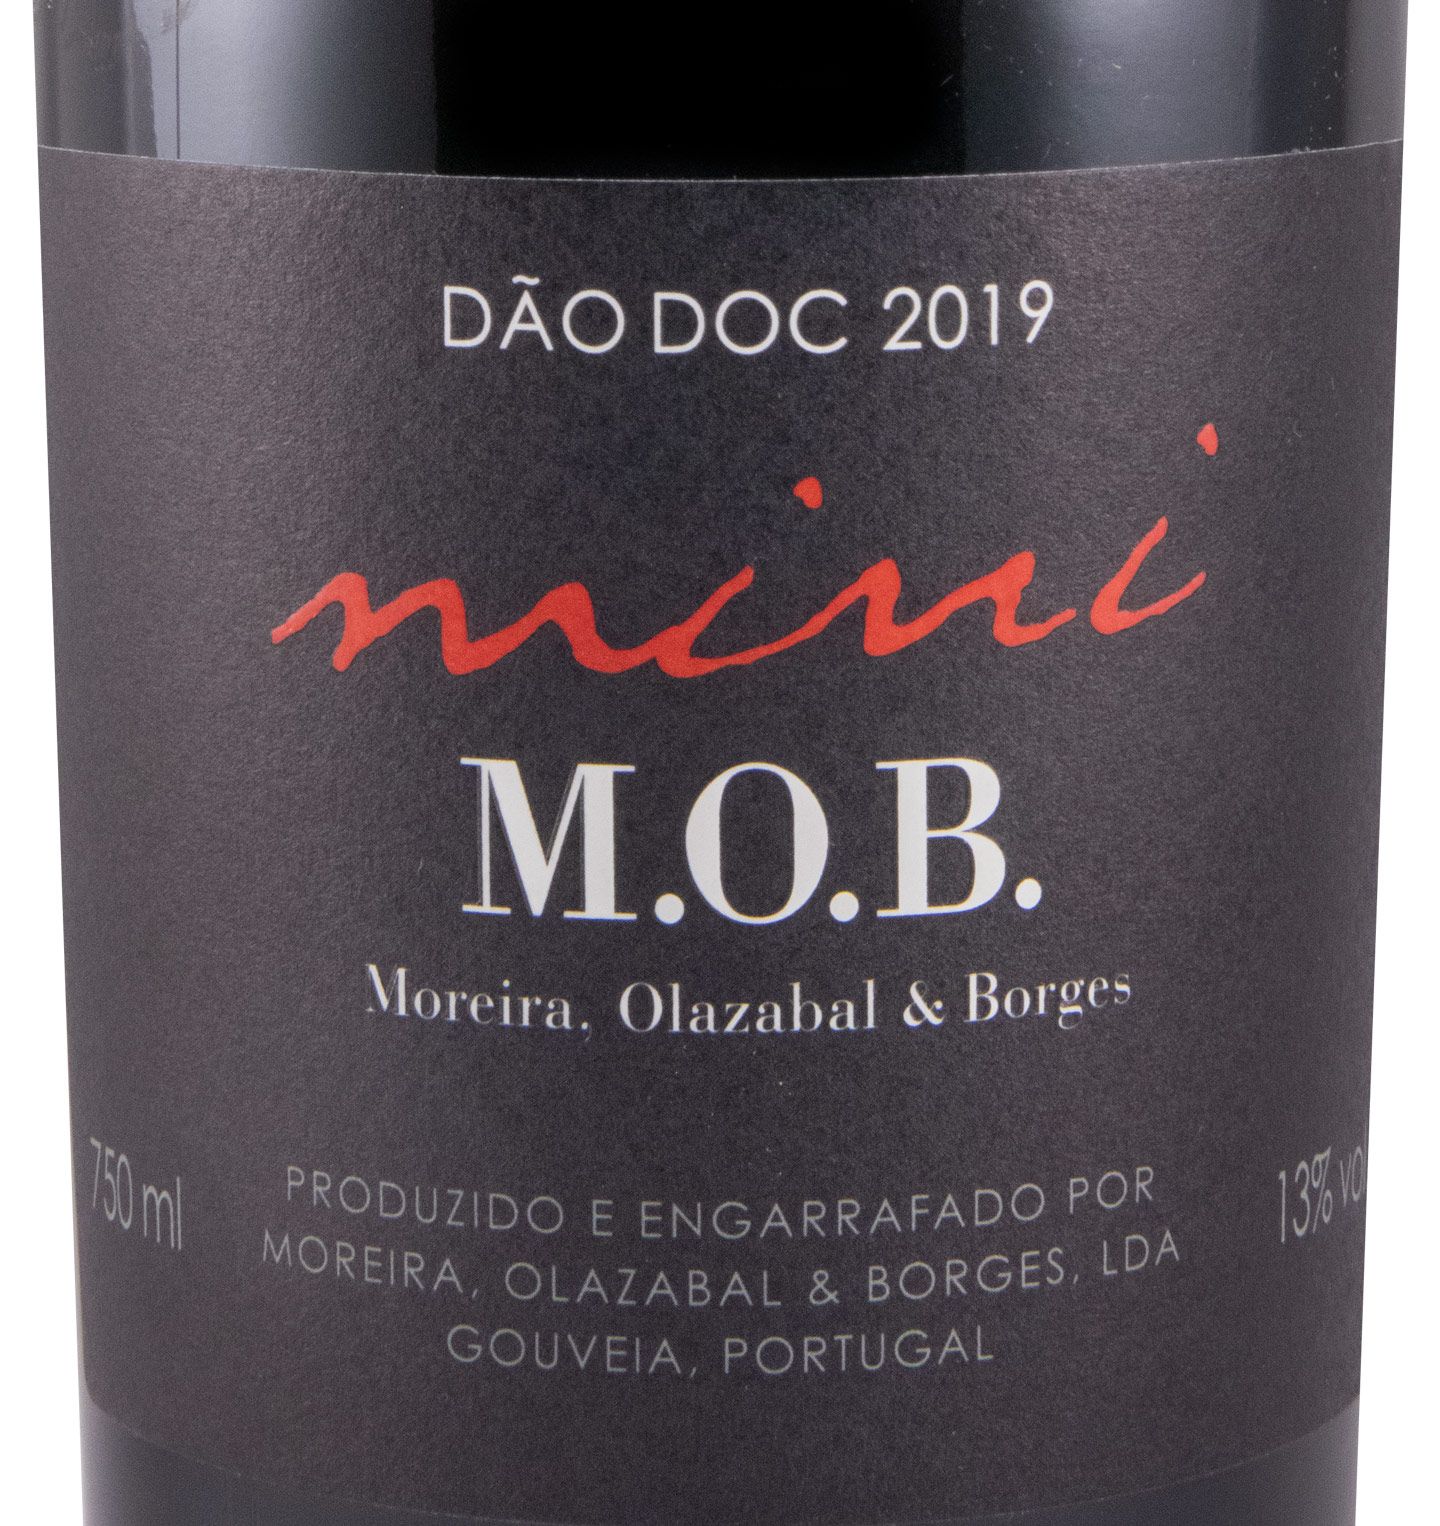 2019 Moreira. Olazabal & Borges Mini MOB red